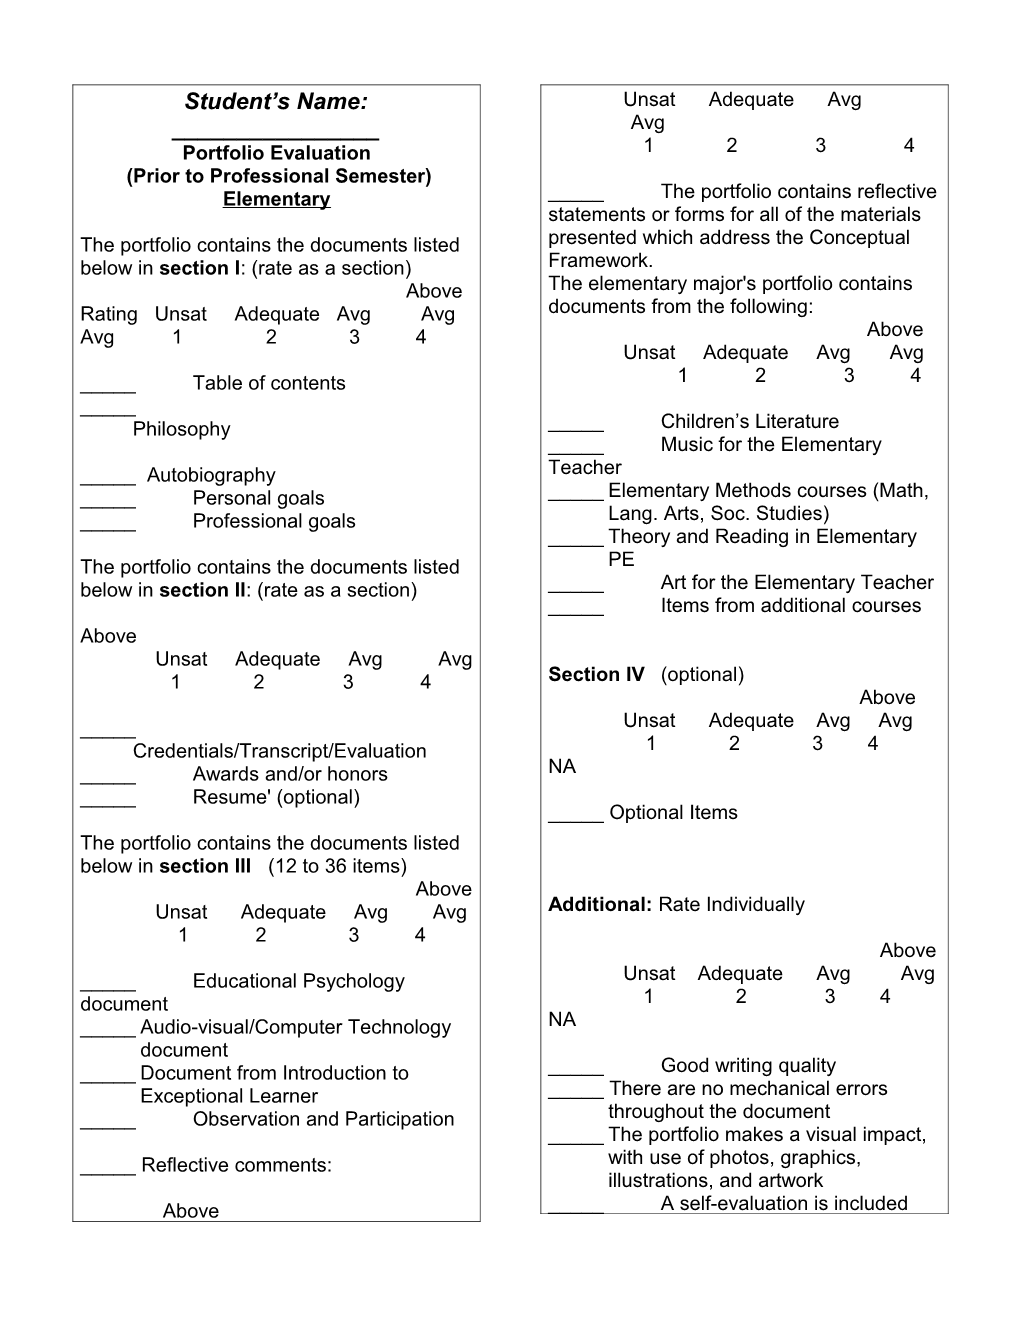 Rubric for Portfolio Evaluation (Prior to Professional Semester) Elementary